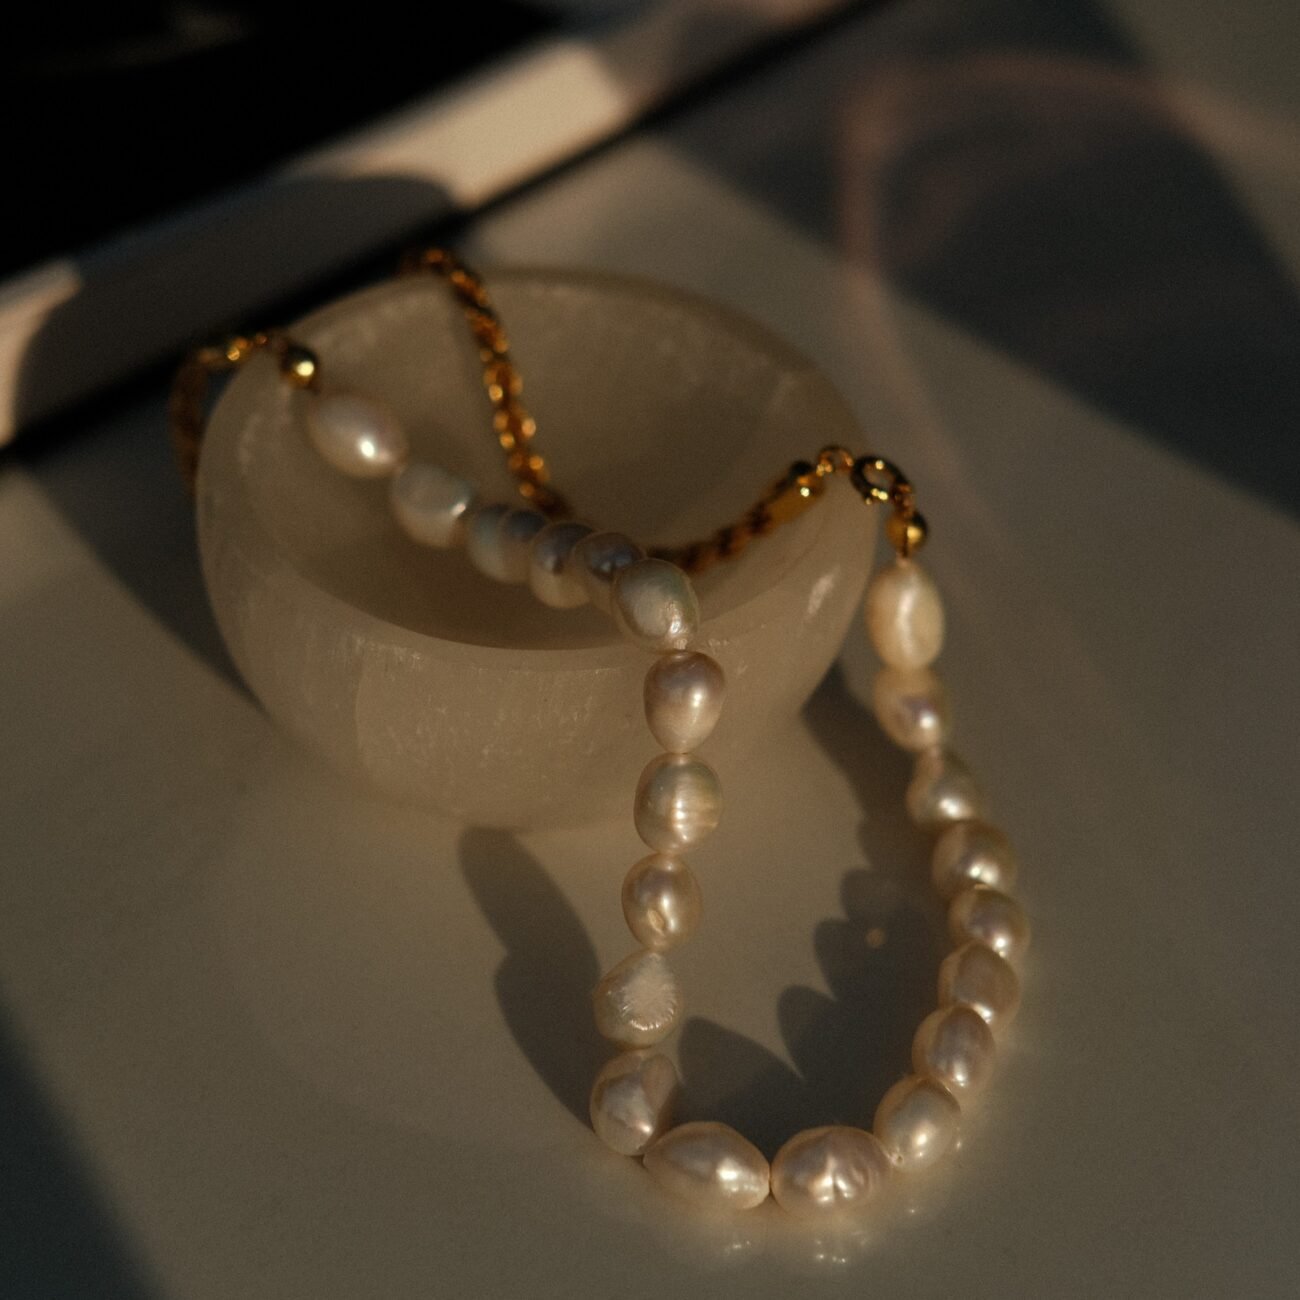 amorphous solid necklace